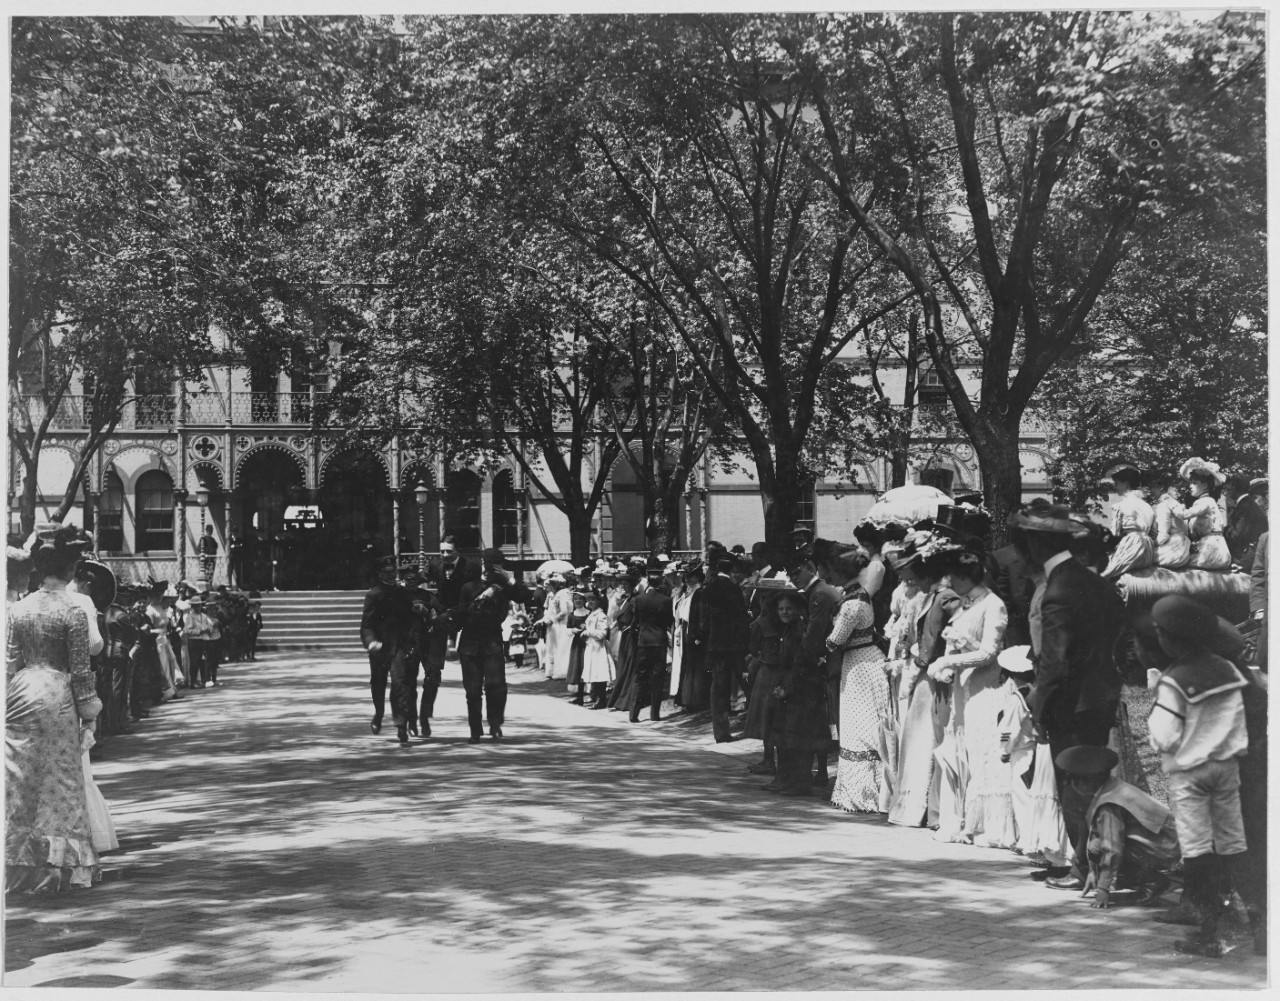 After graduating, 1905